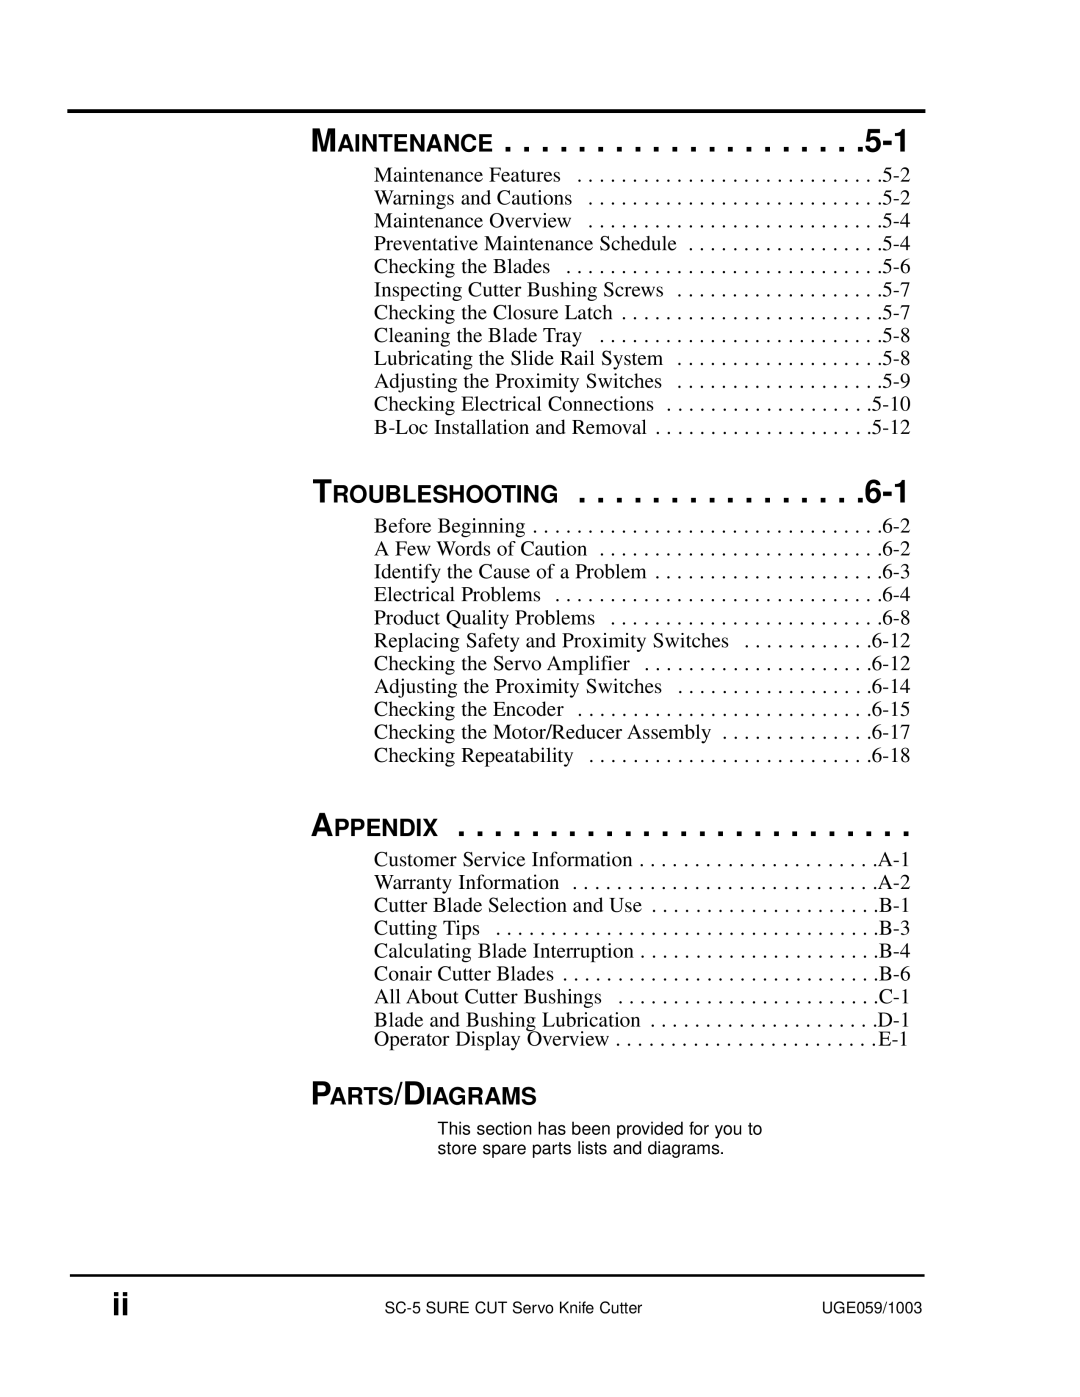 Conair SC-5 manual Maintenance, Troubleshooting, Appendix, Parts/Diagrams 